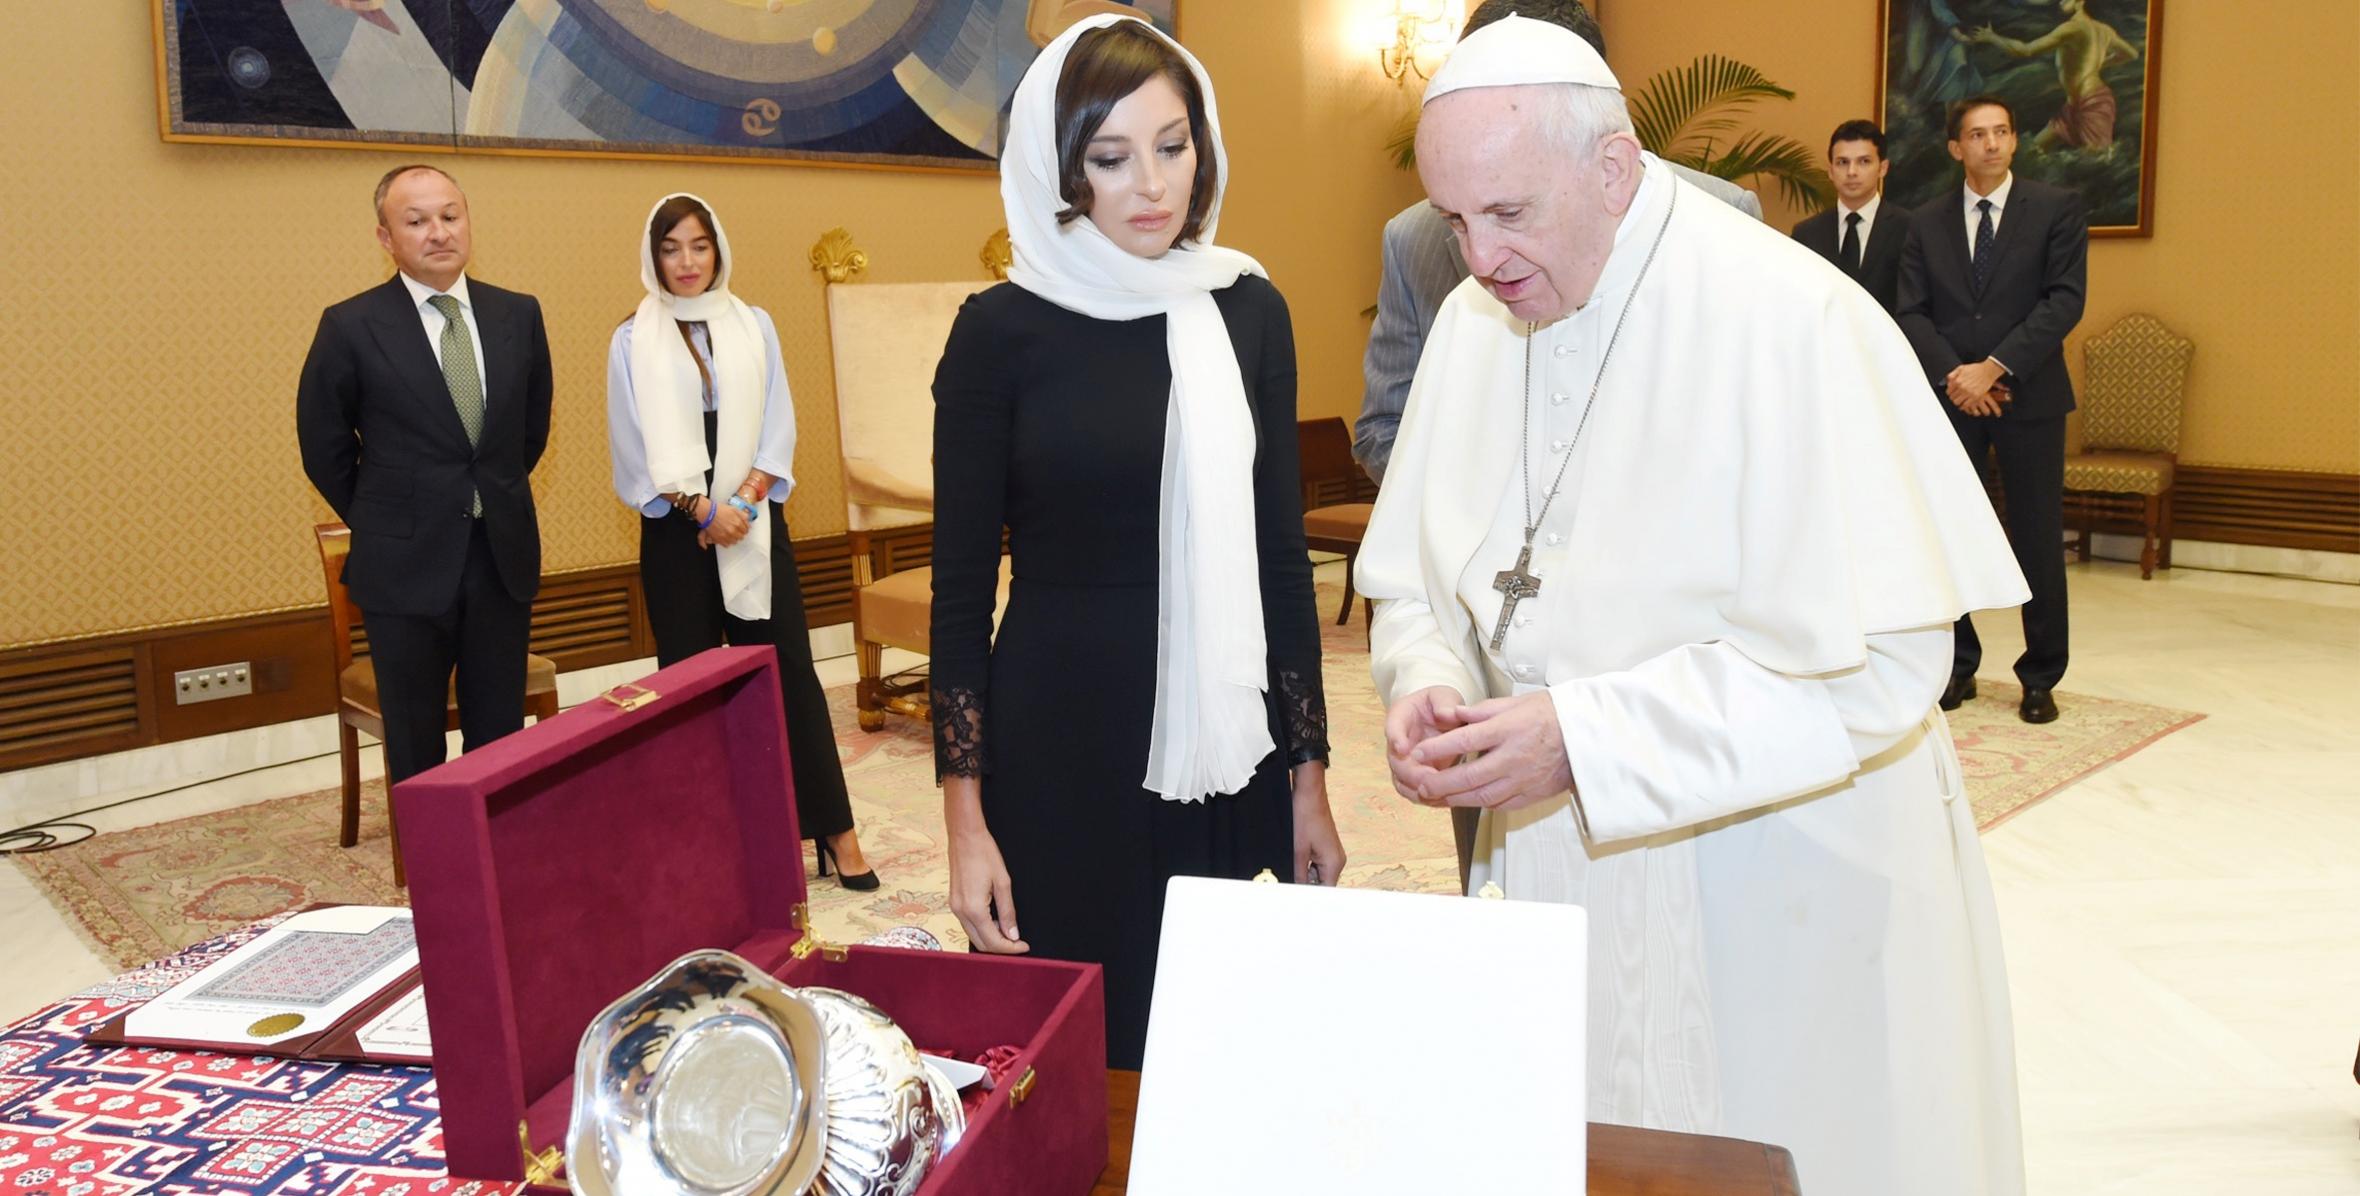 First Vice-President Mehriban Aliyeva met with Pope Francis